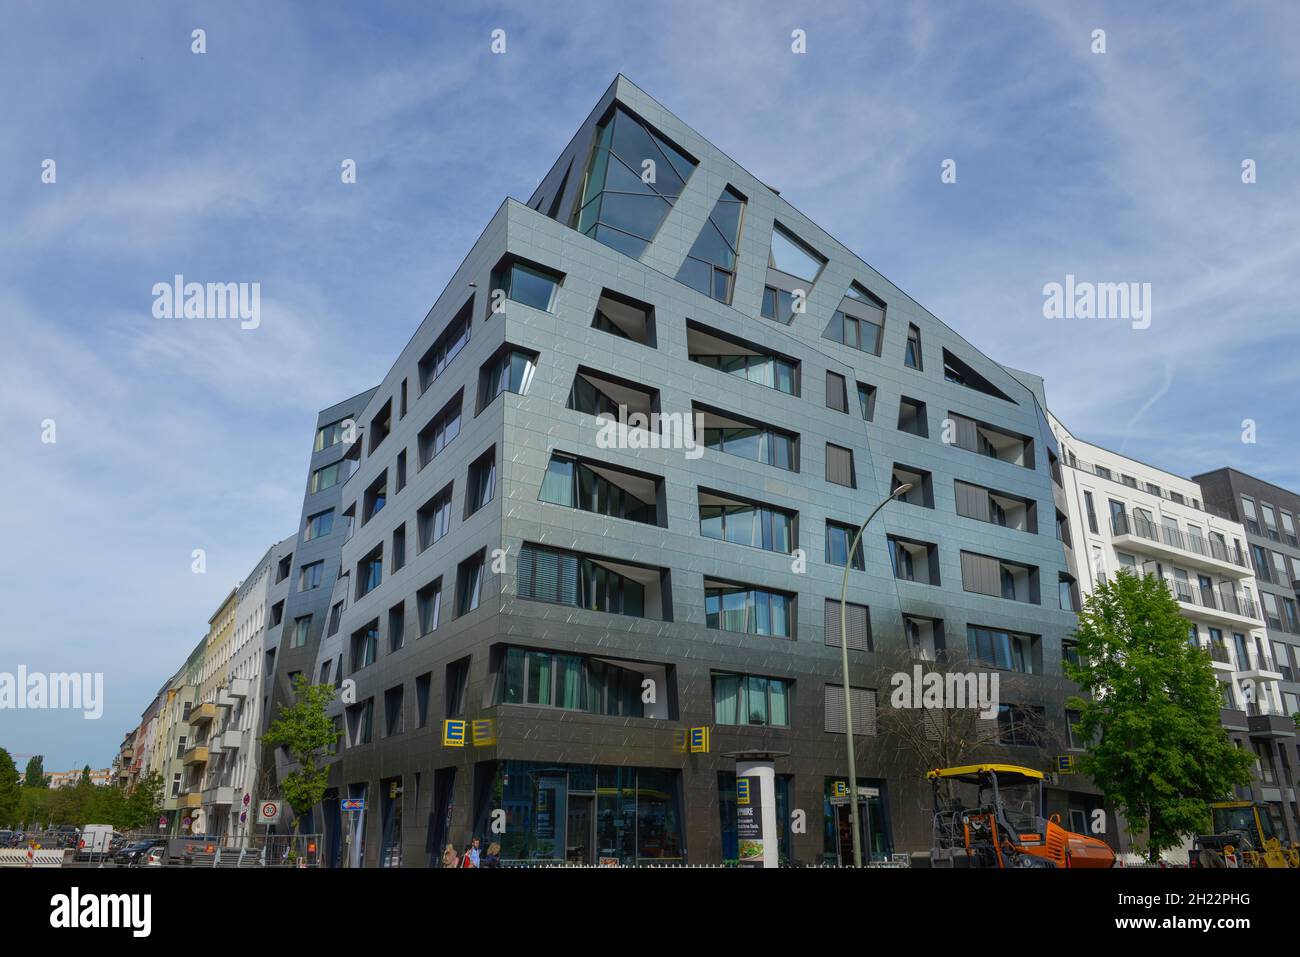 Nouveau bâtiment Daniel Libeskind, Chausseestrasse, Schwartzkopffstrasse, Mitte, Berlin,Allemagne Banque D'Images